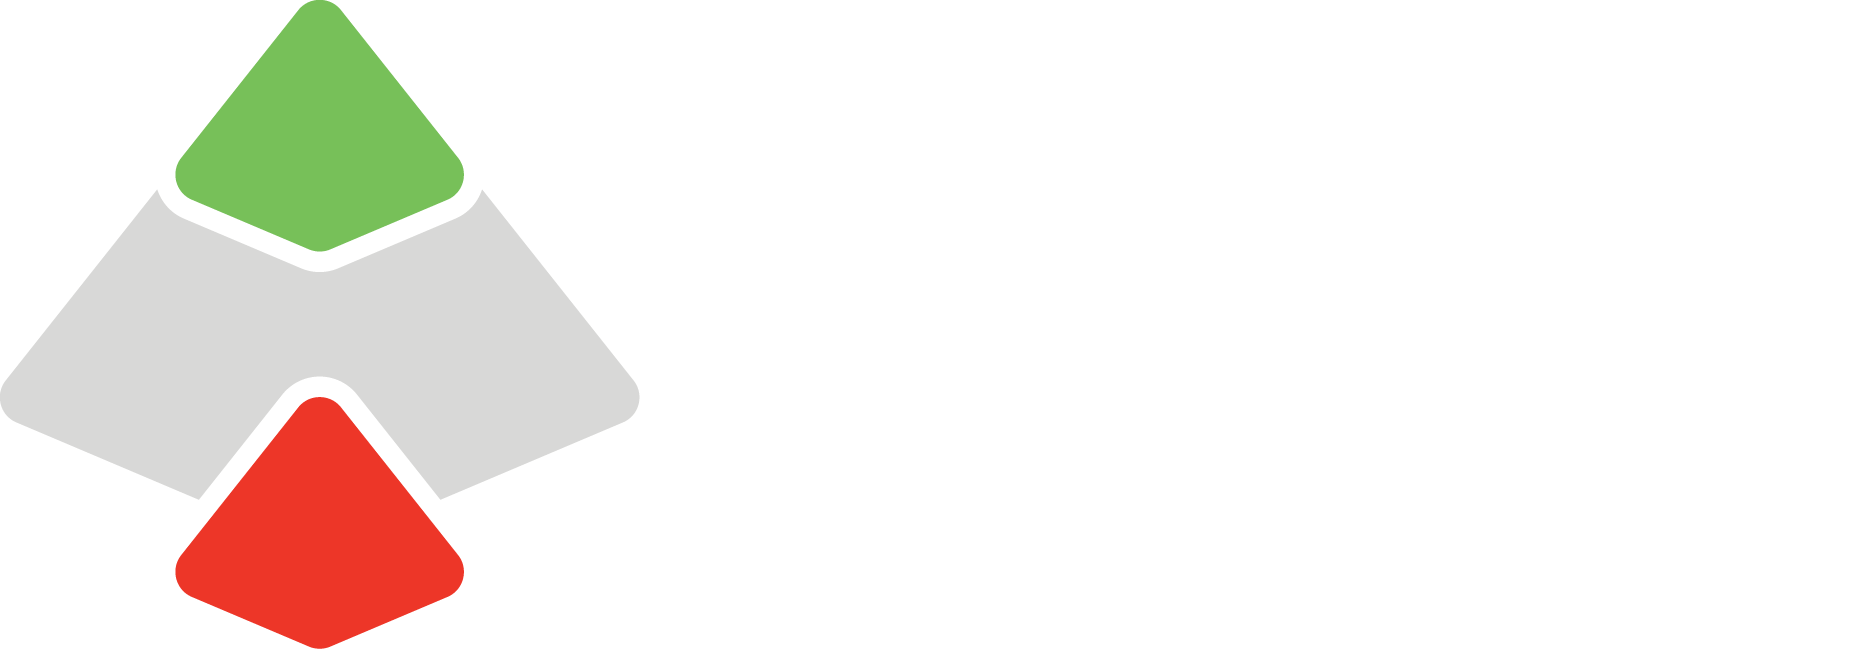 future 4 orphans